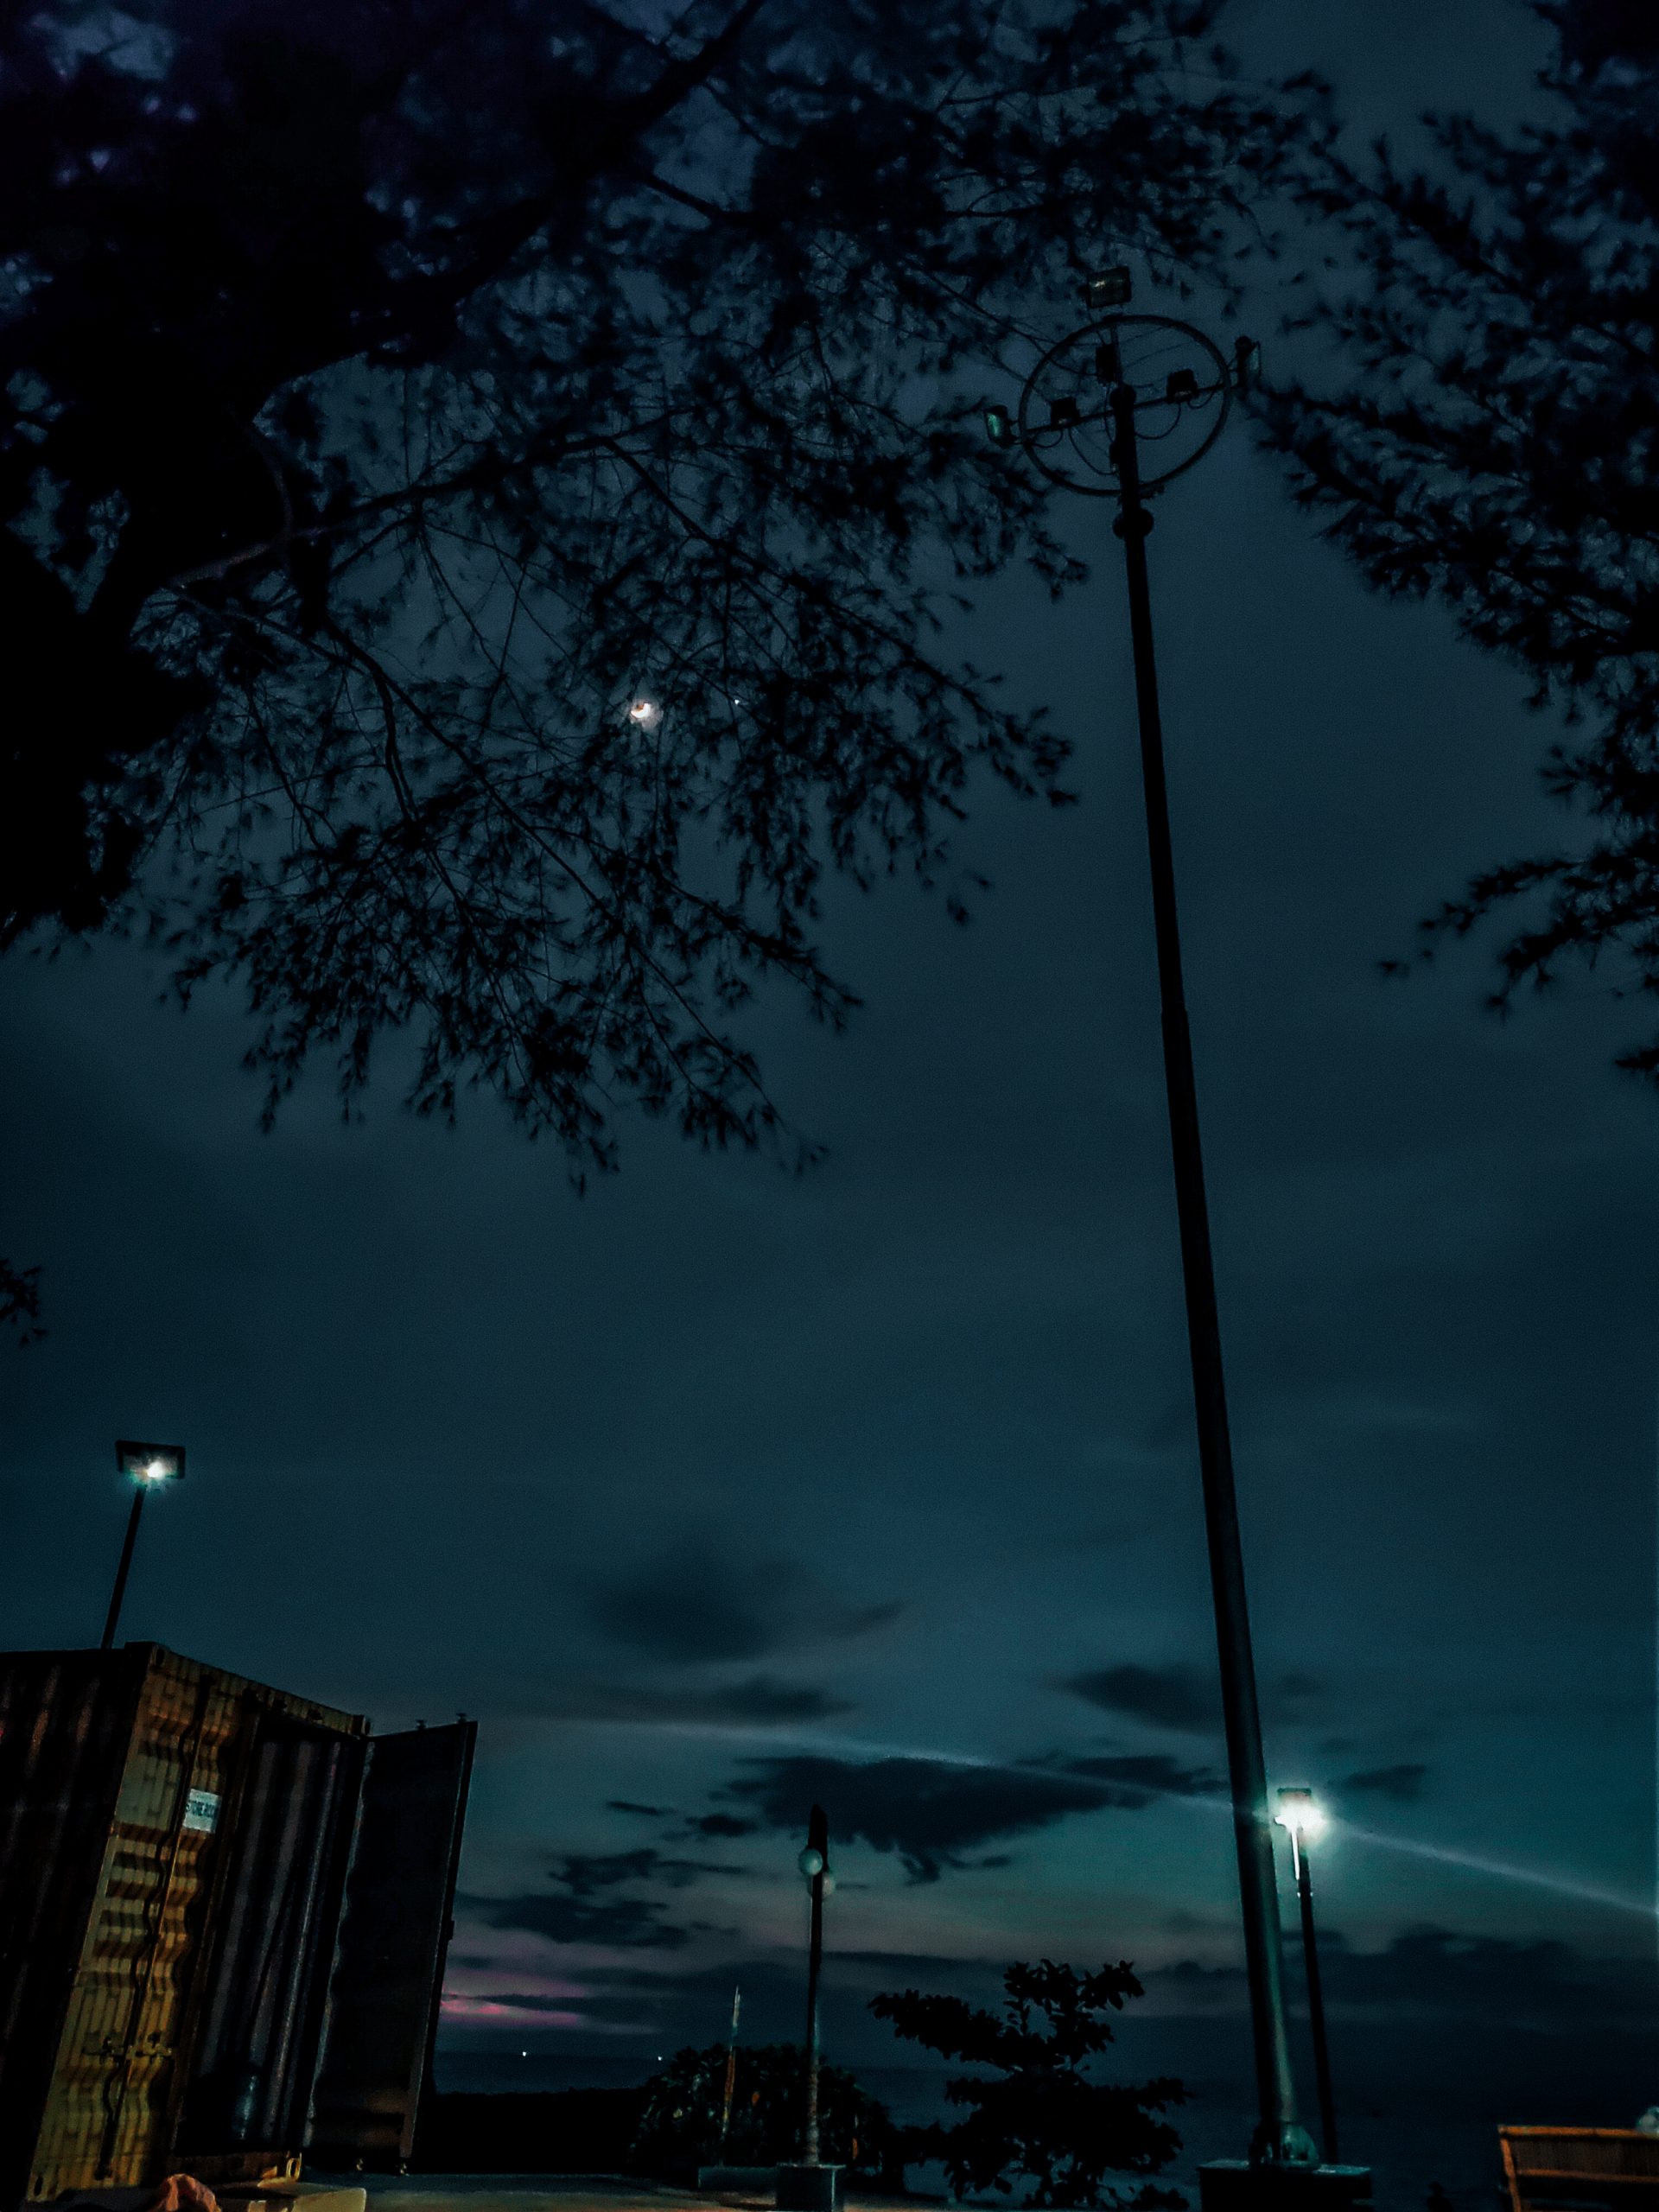 sky during night